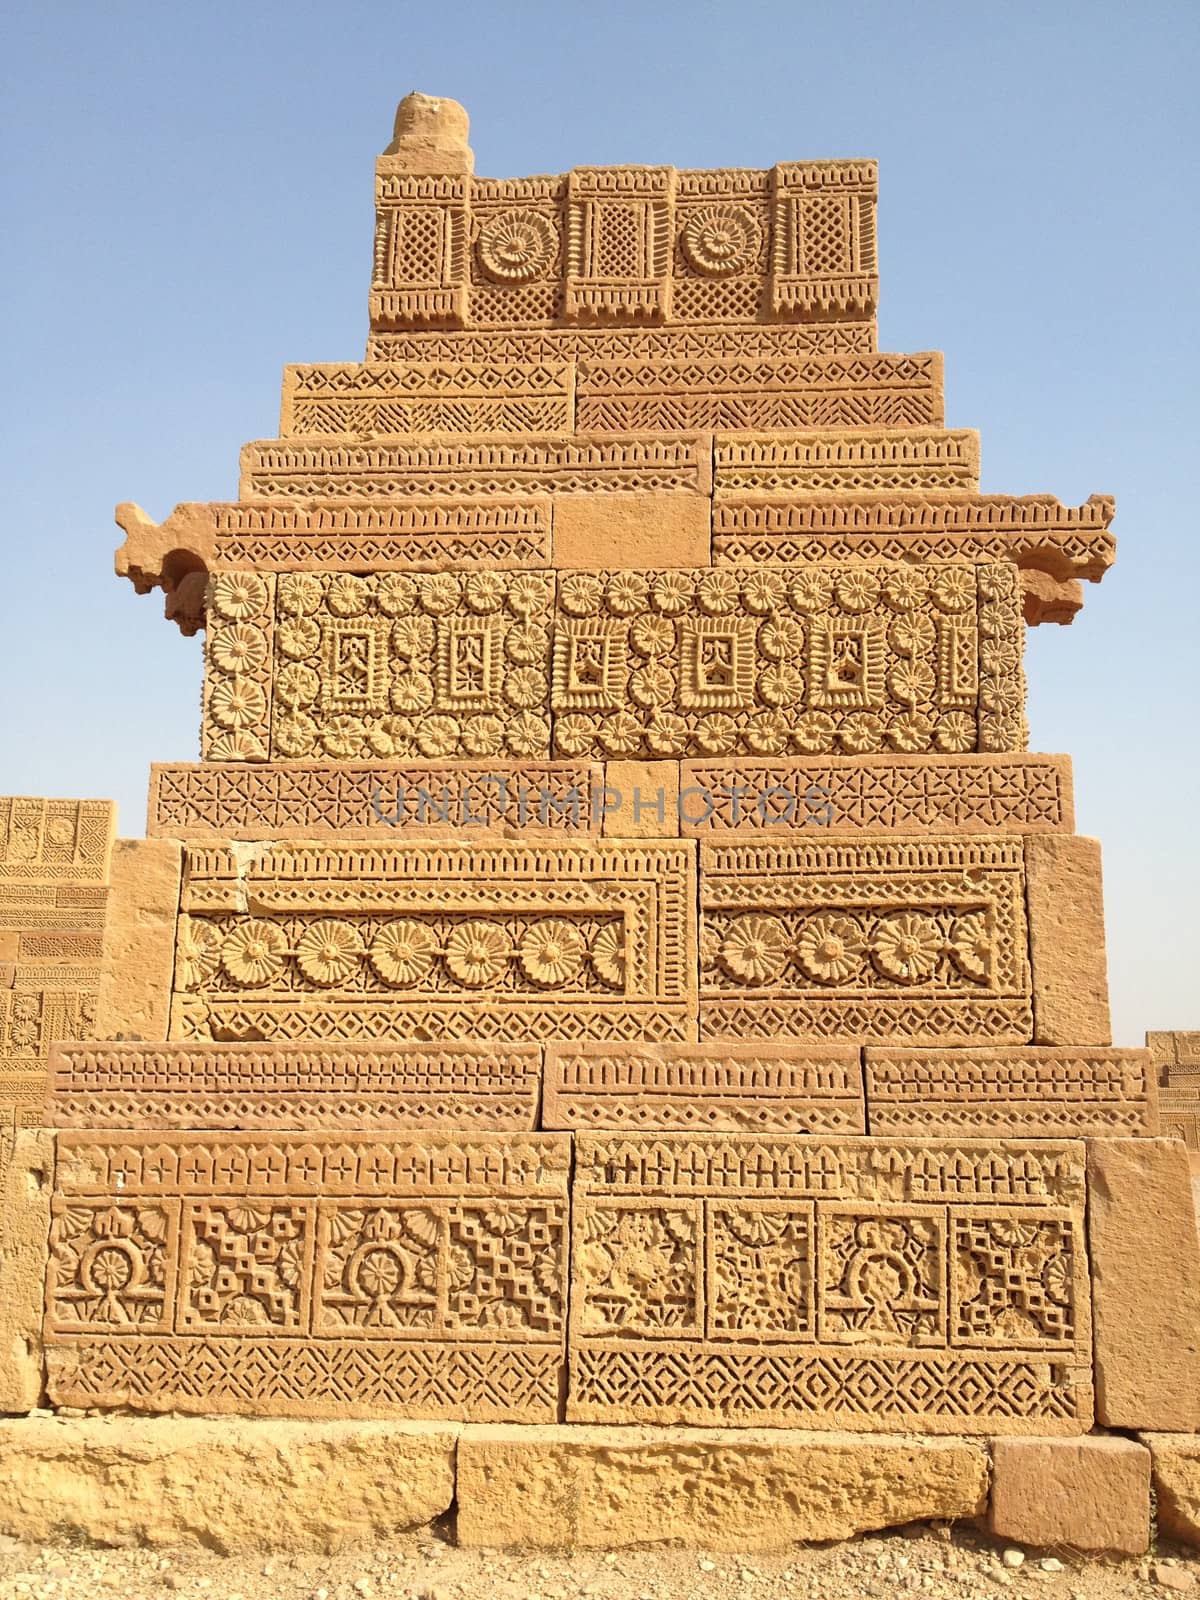 Chaukandi Tombs detail by haiderazim